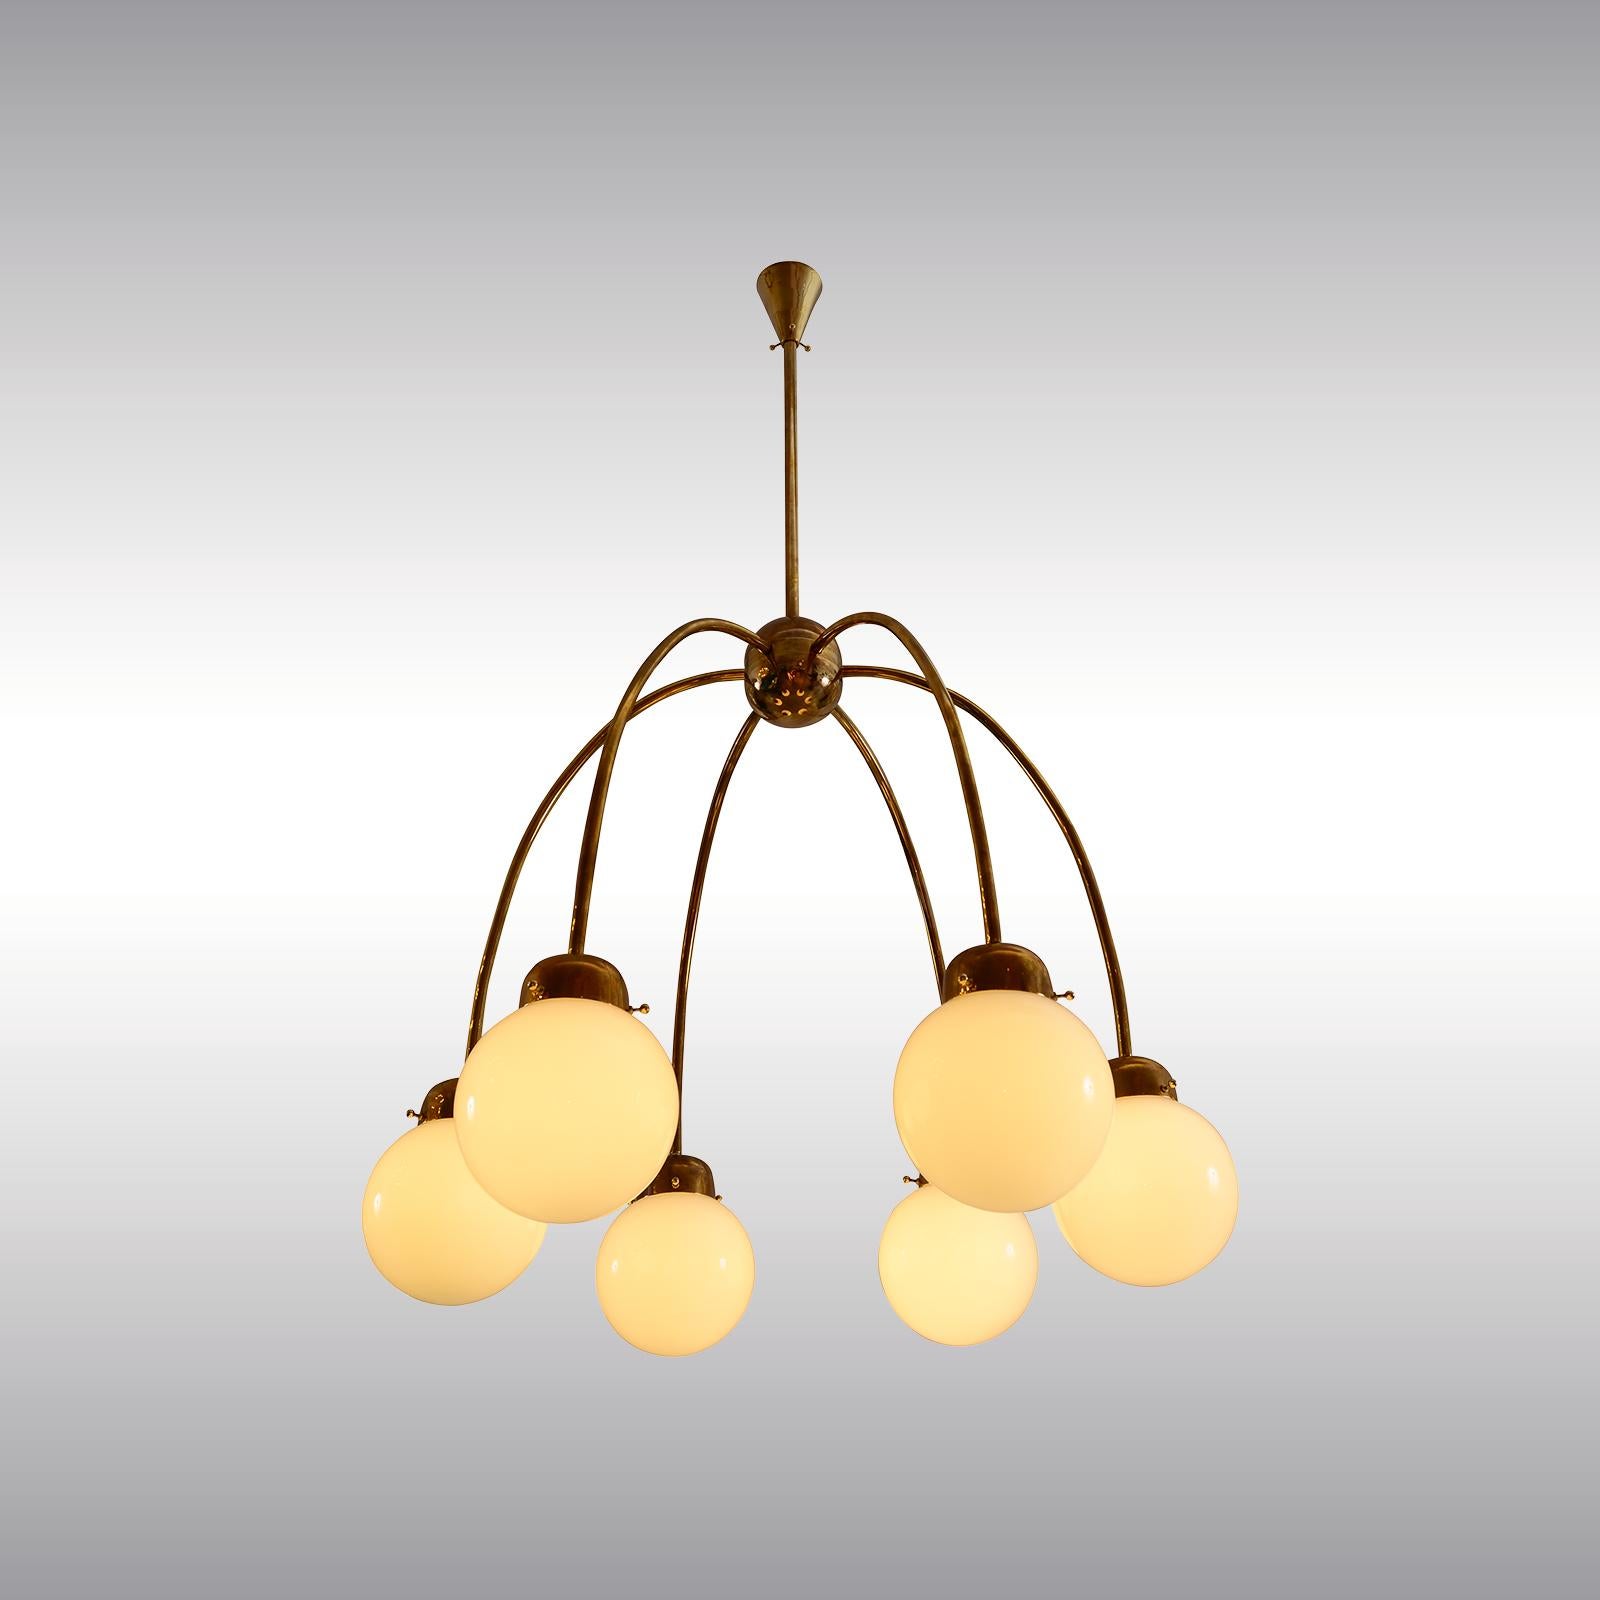 Josef Hoffmann for Wiener Werkstaette Art Deco Ceiling Lamp, Re-Edition For Sale 3